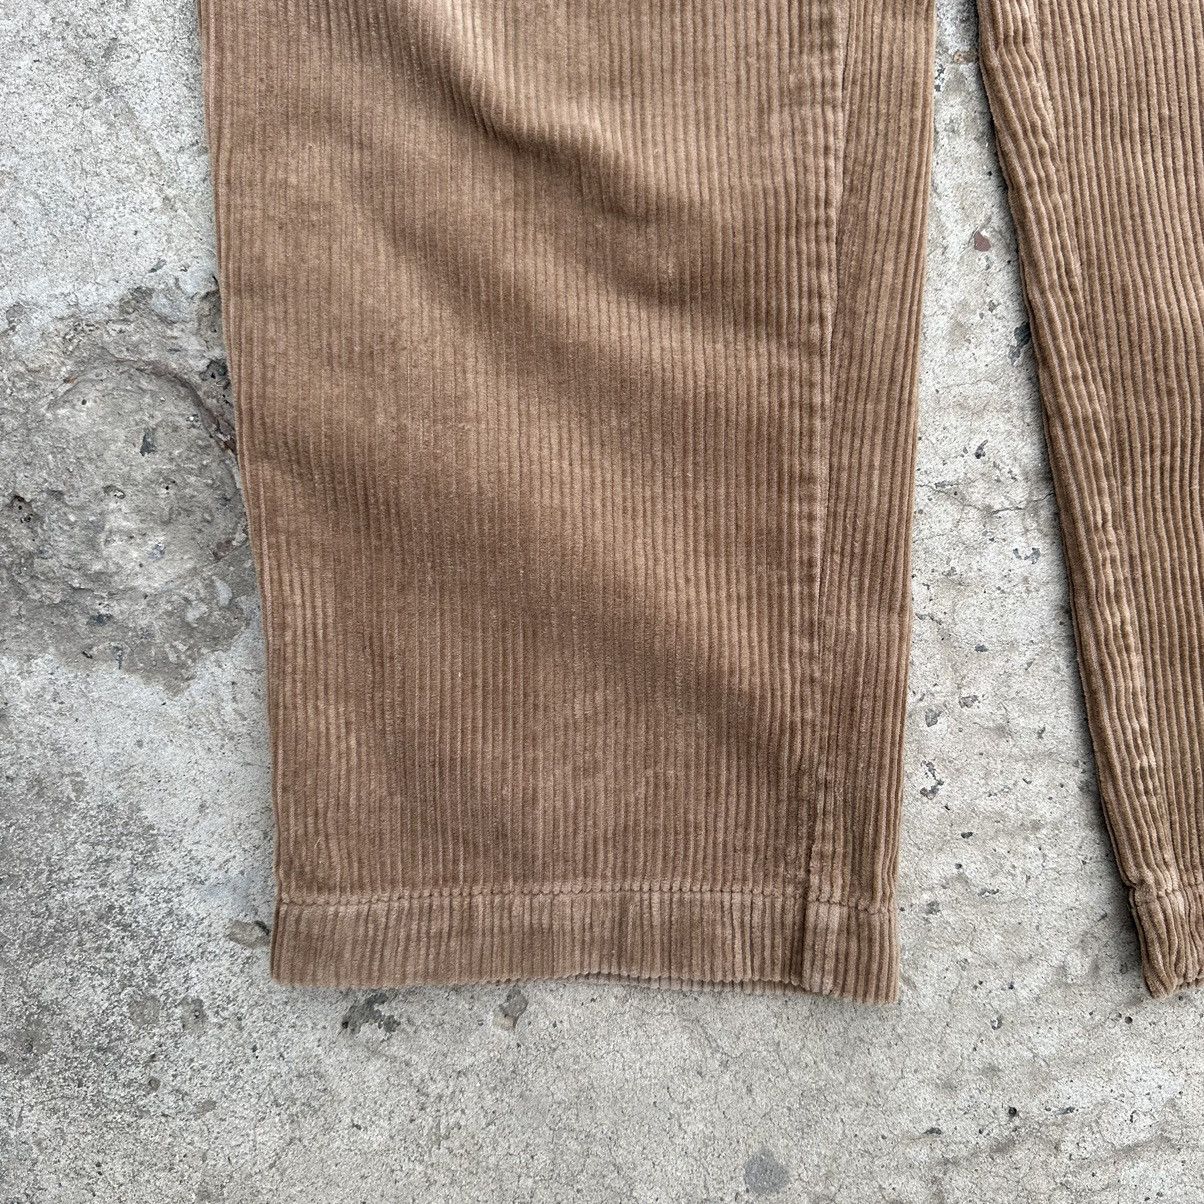 Vintage Vintage Corduroy Pants Marlboro Classic velveteen 90s Size US 32 / EU 48 - 5 Thumbnail